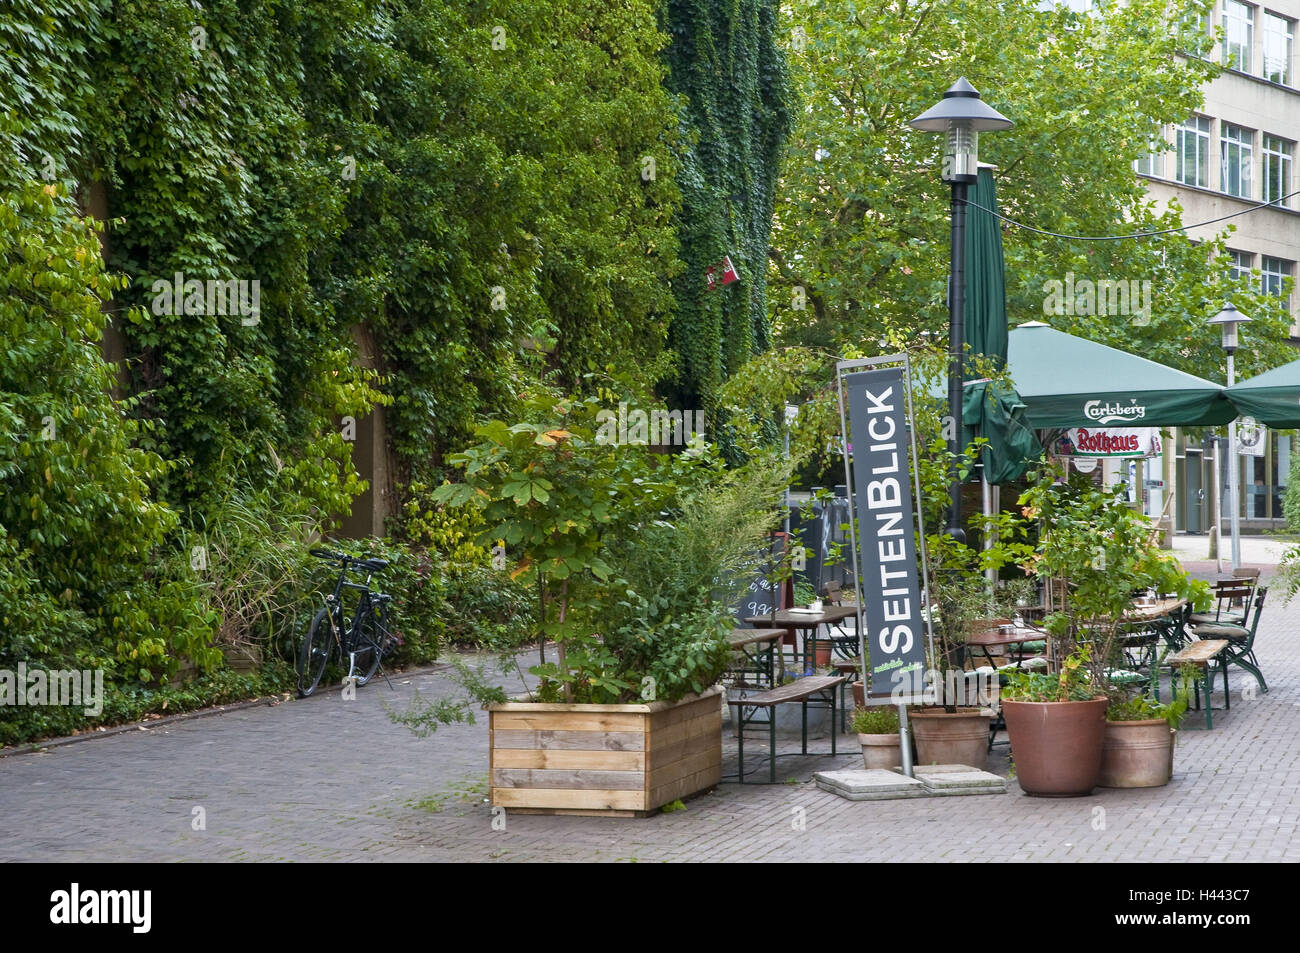 Street cafe 'Side sintesi', lane Trentel, cibo, Renania settentrionale-Vestfalia, Germania, Foto Stock